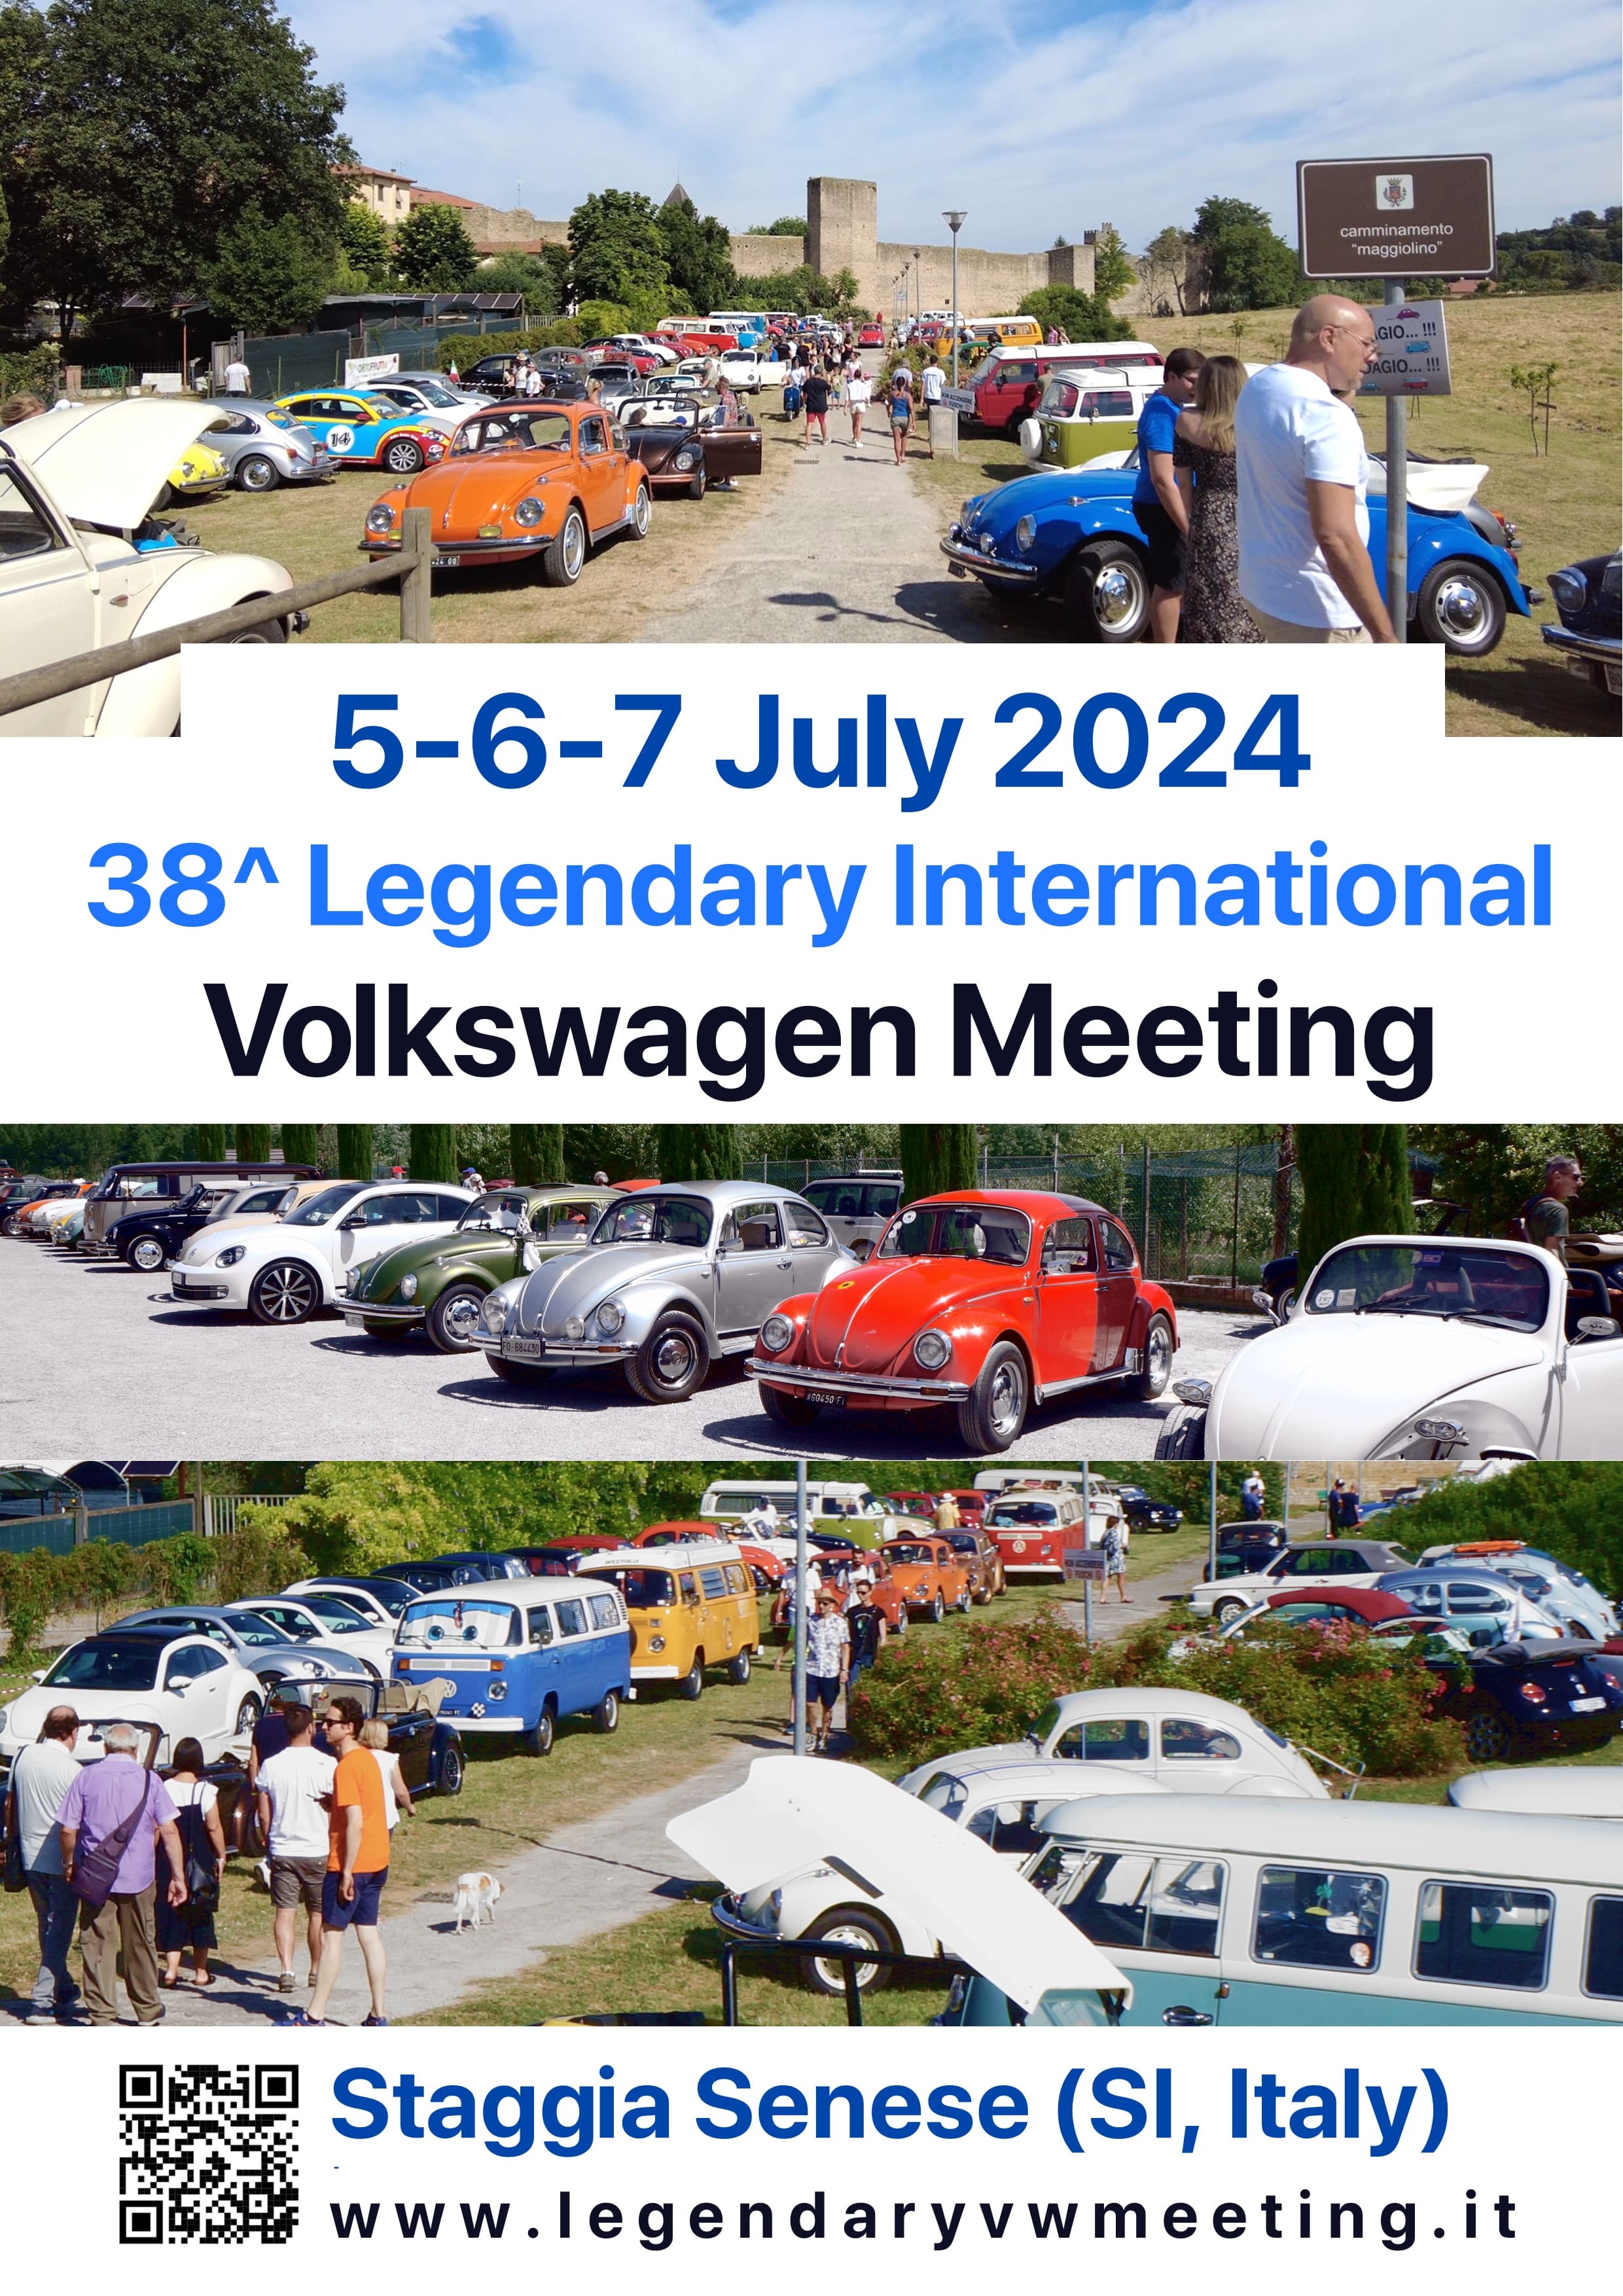 38º Legendary International Volkswagen Meeting, Staggia Senese, Siena, July 2024